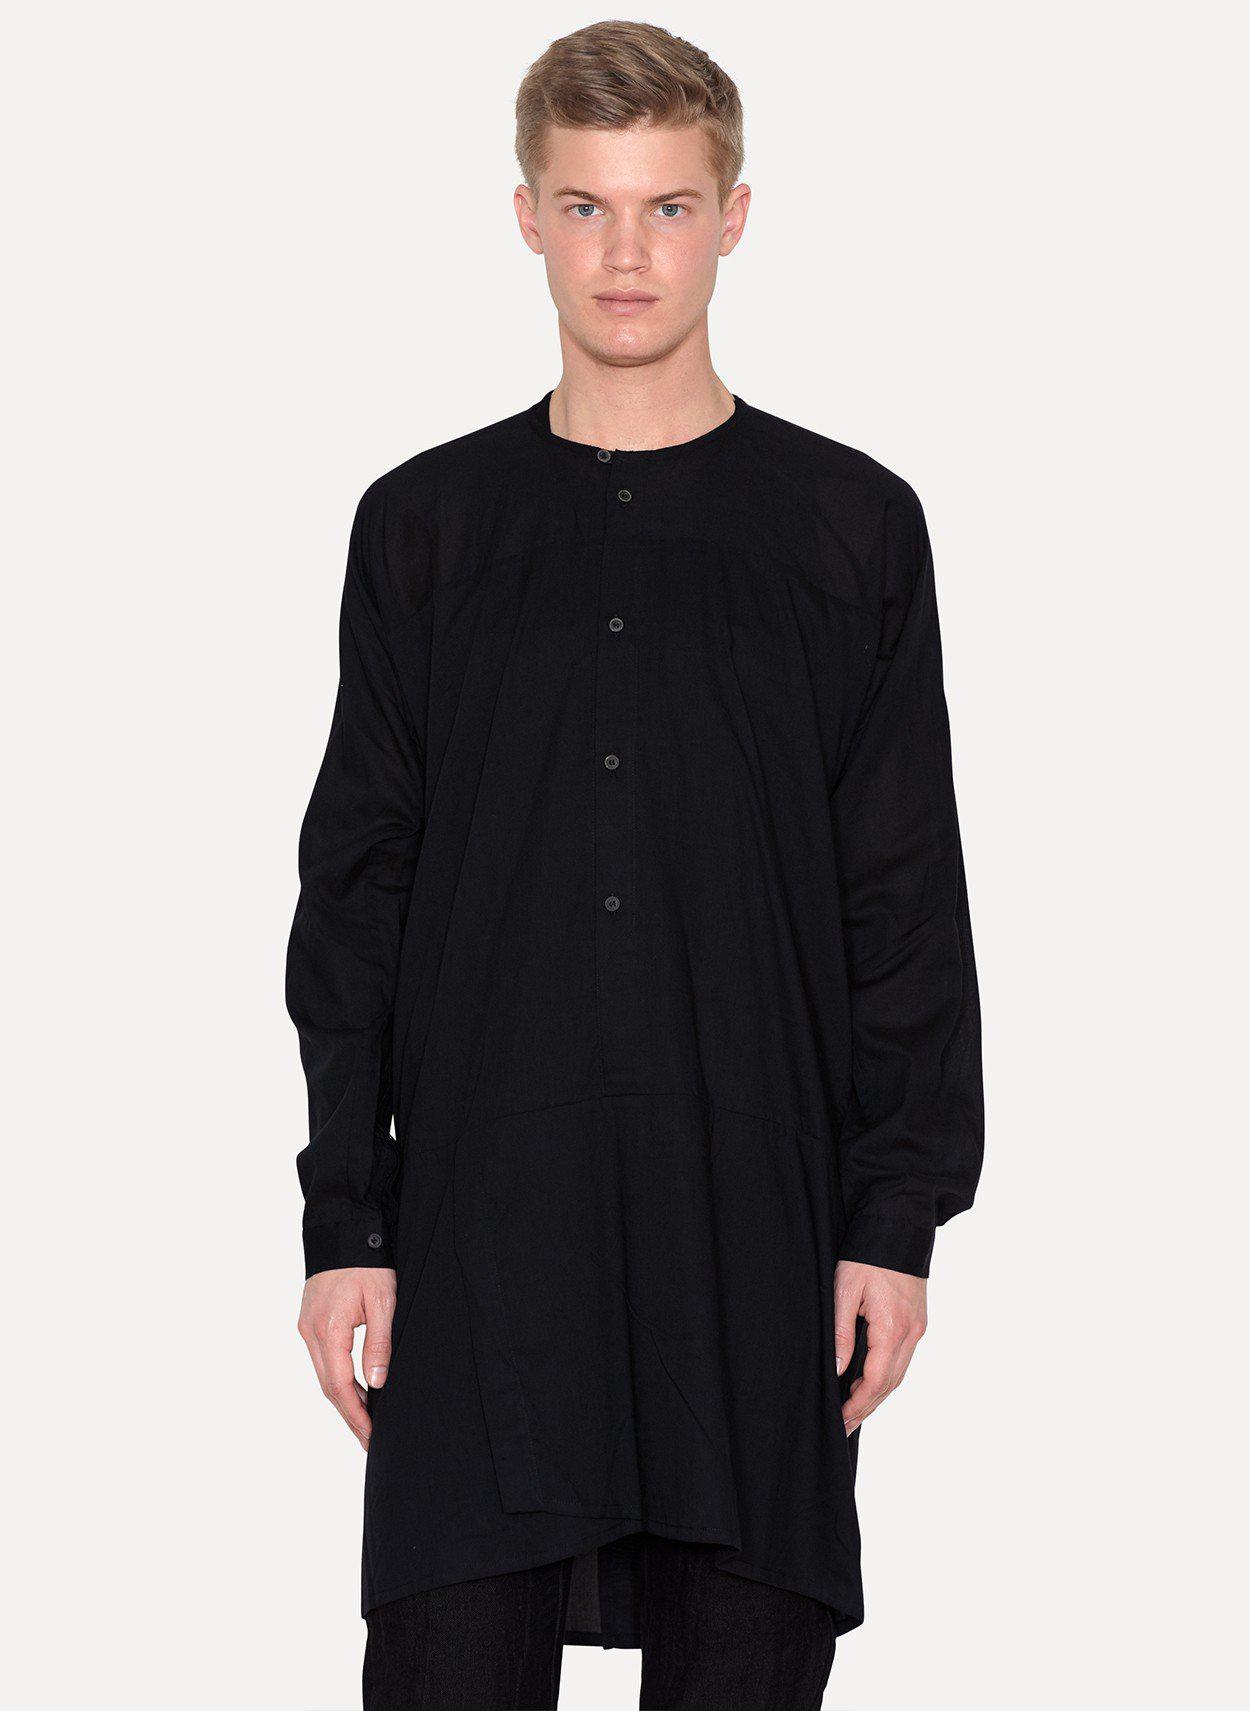 Lyst - Jan Jan Van Essche Black Light Cotton Wool Shirt in Black for Men